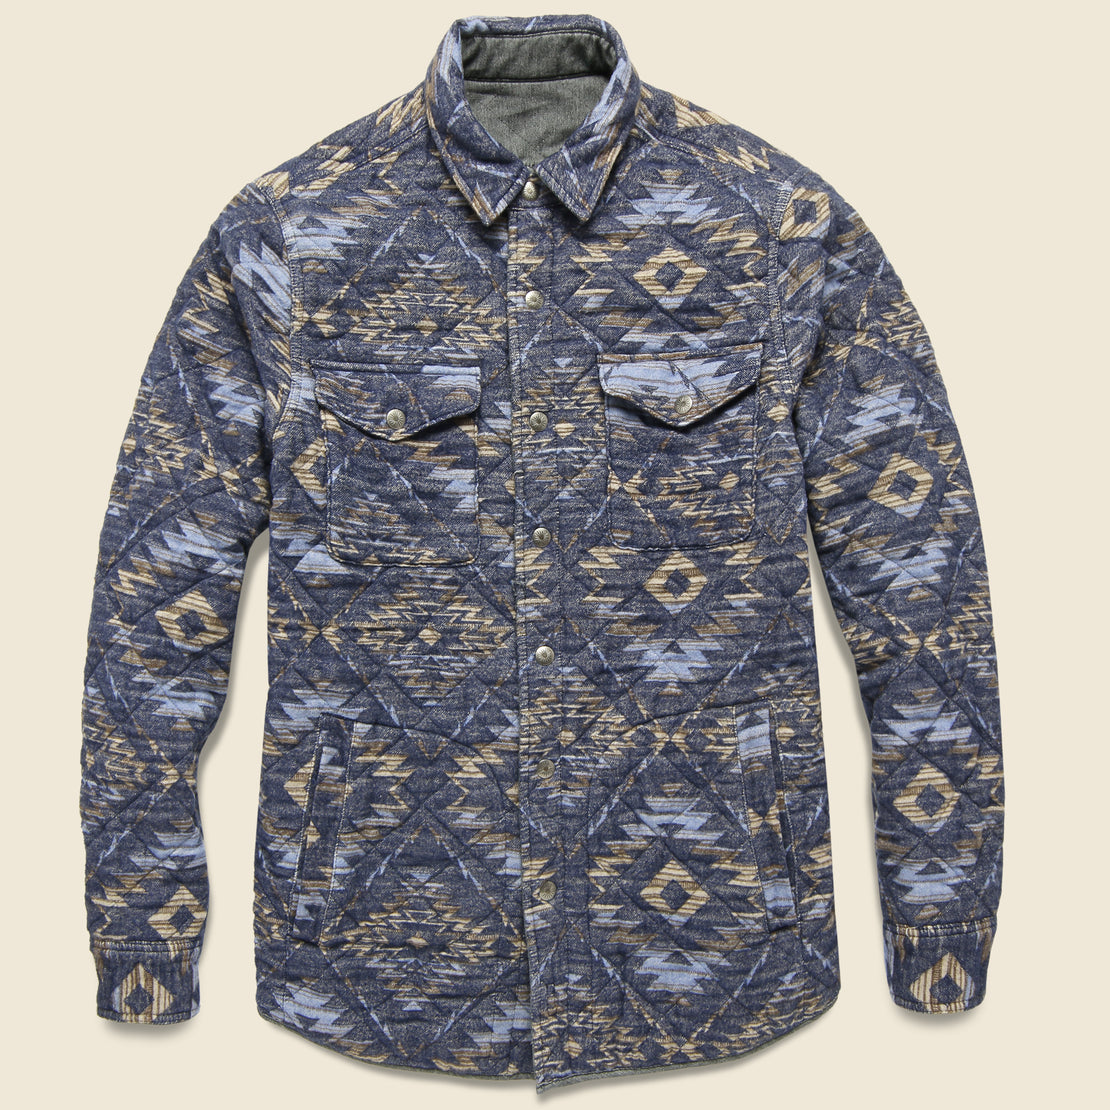 Style Pick of the Week: Faherty Brand Bondi Jacket